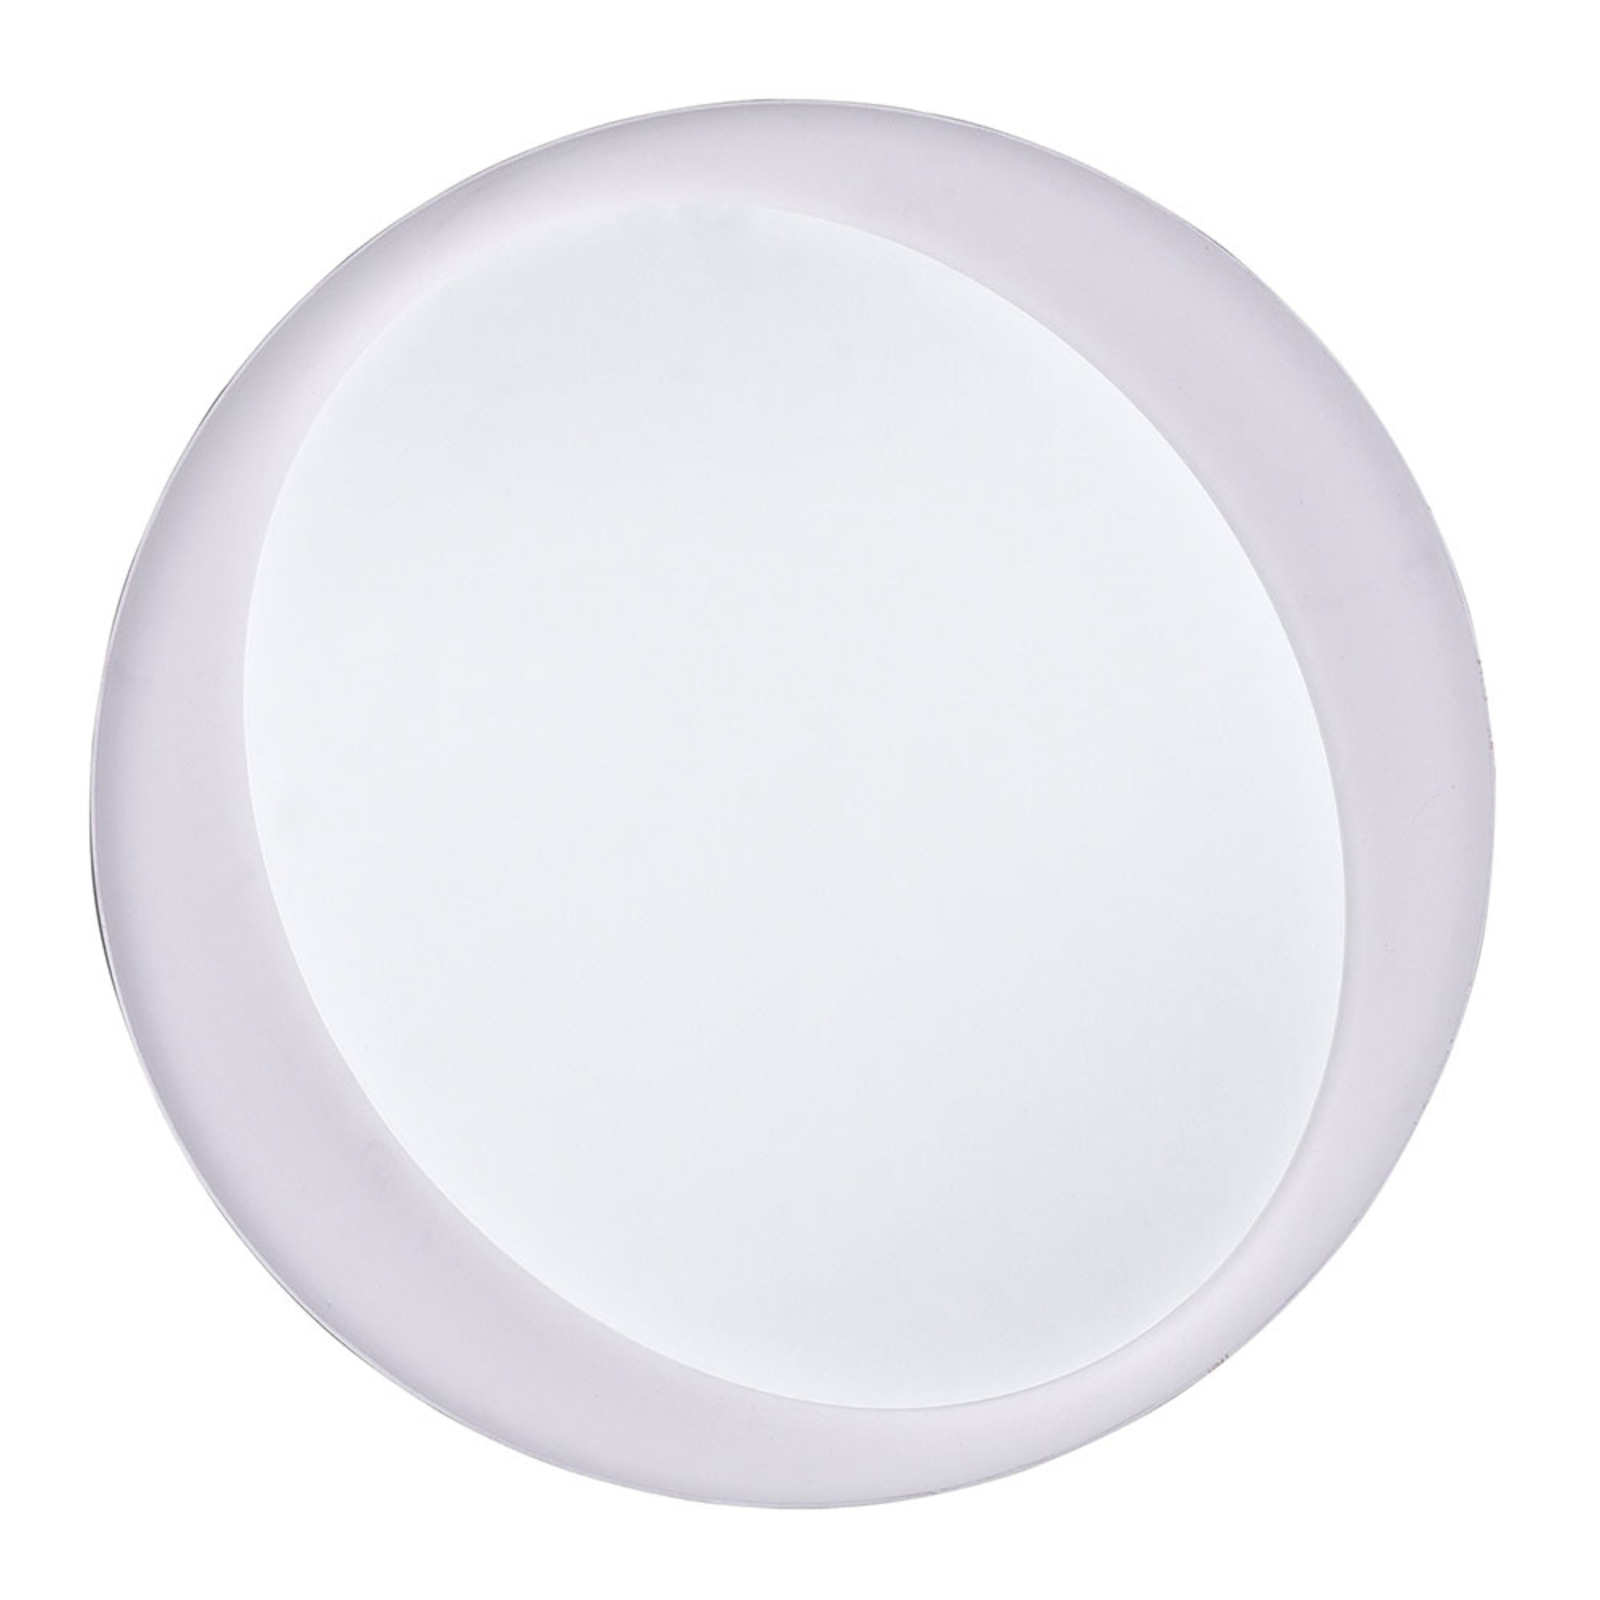 LED-Deckenleuchte Zeta tunable white, grau/weiß